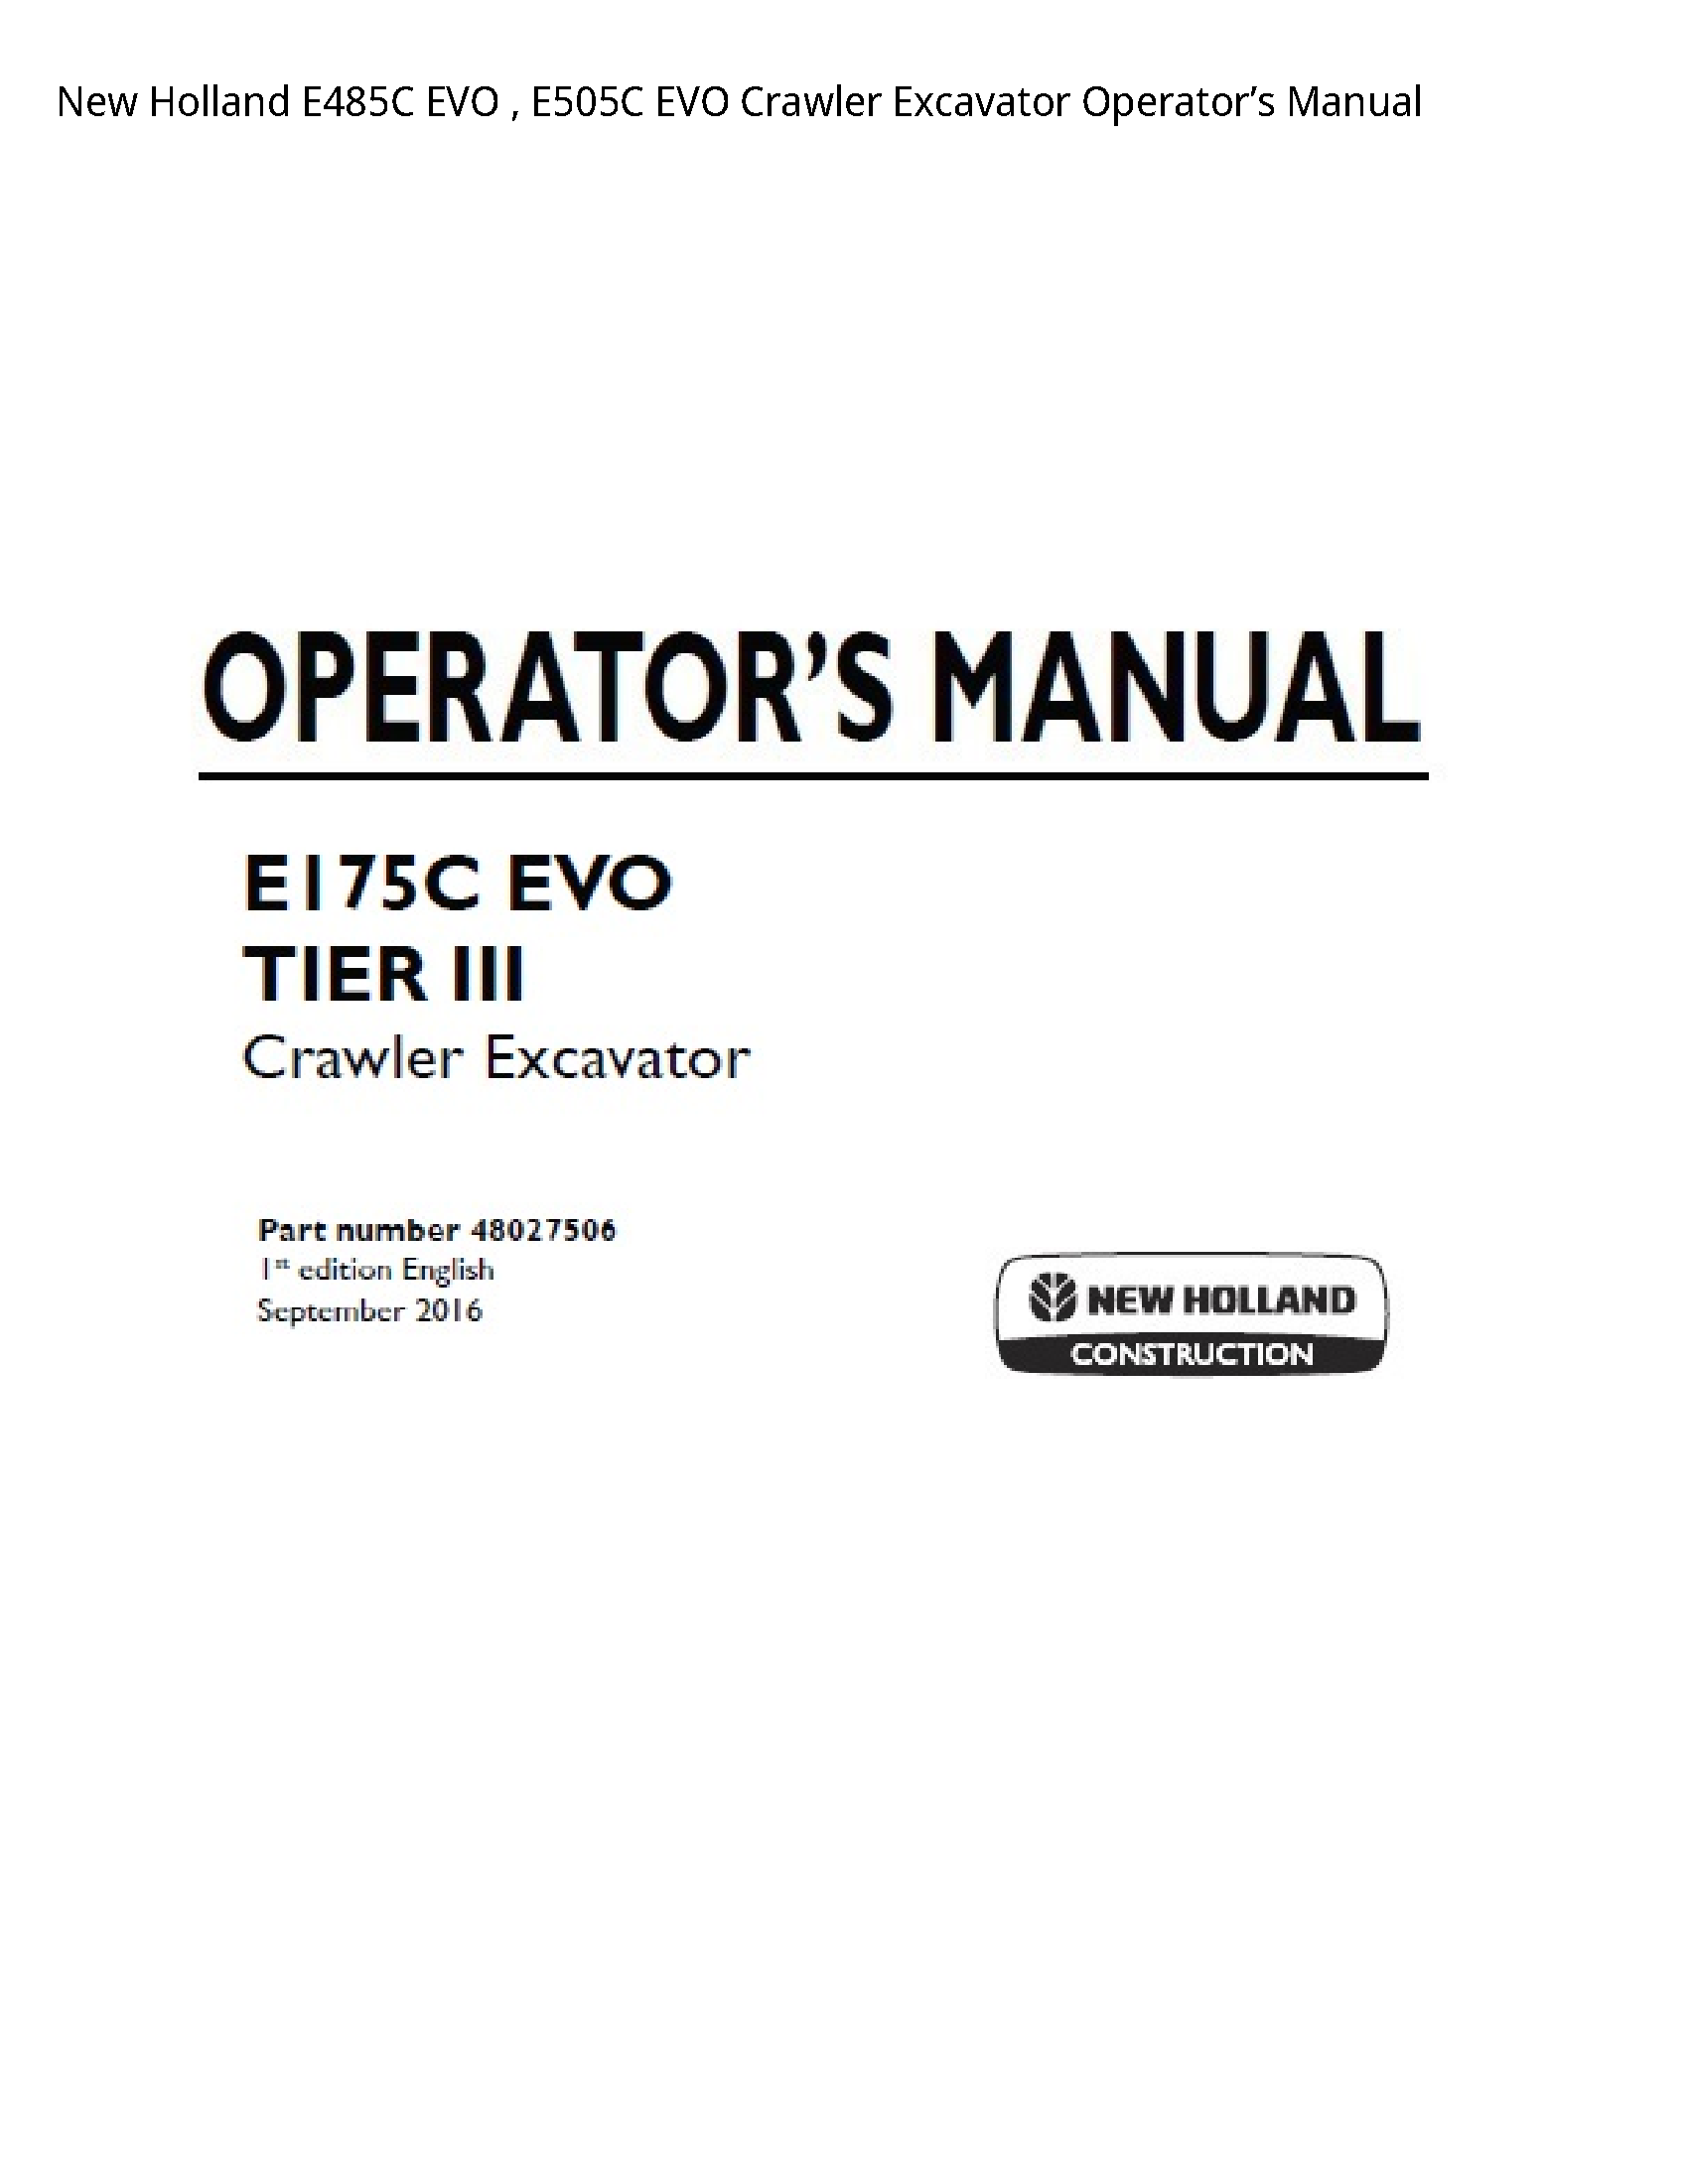 New Holland E485C EVO EVO Crawler Excavator Operator’s manual